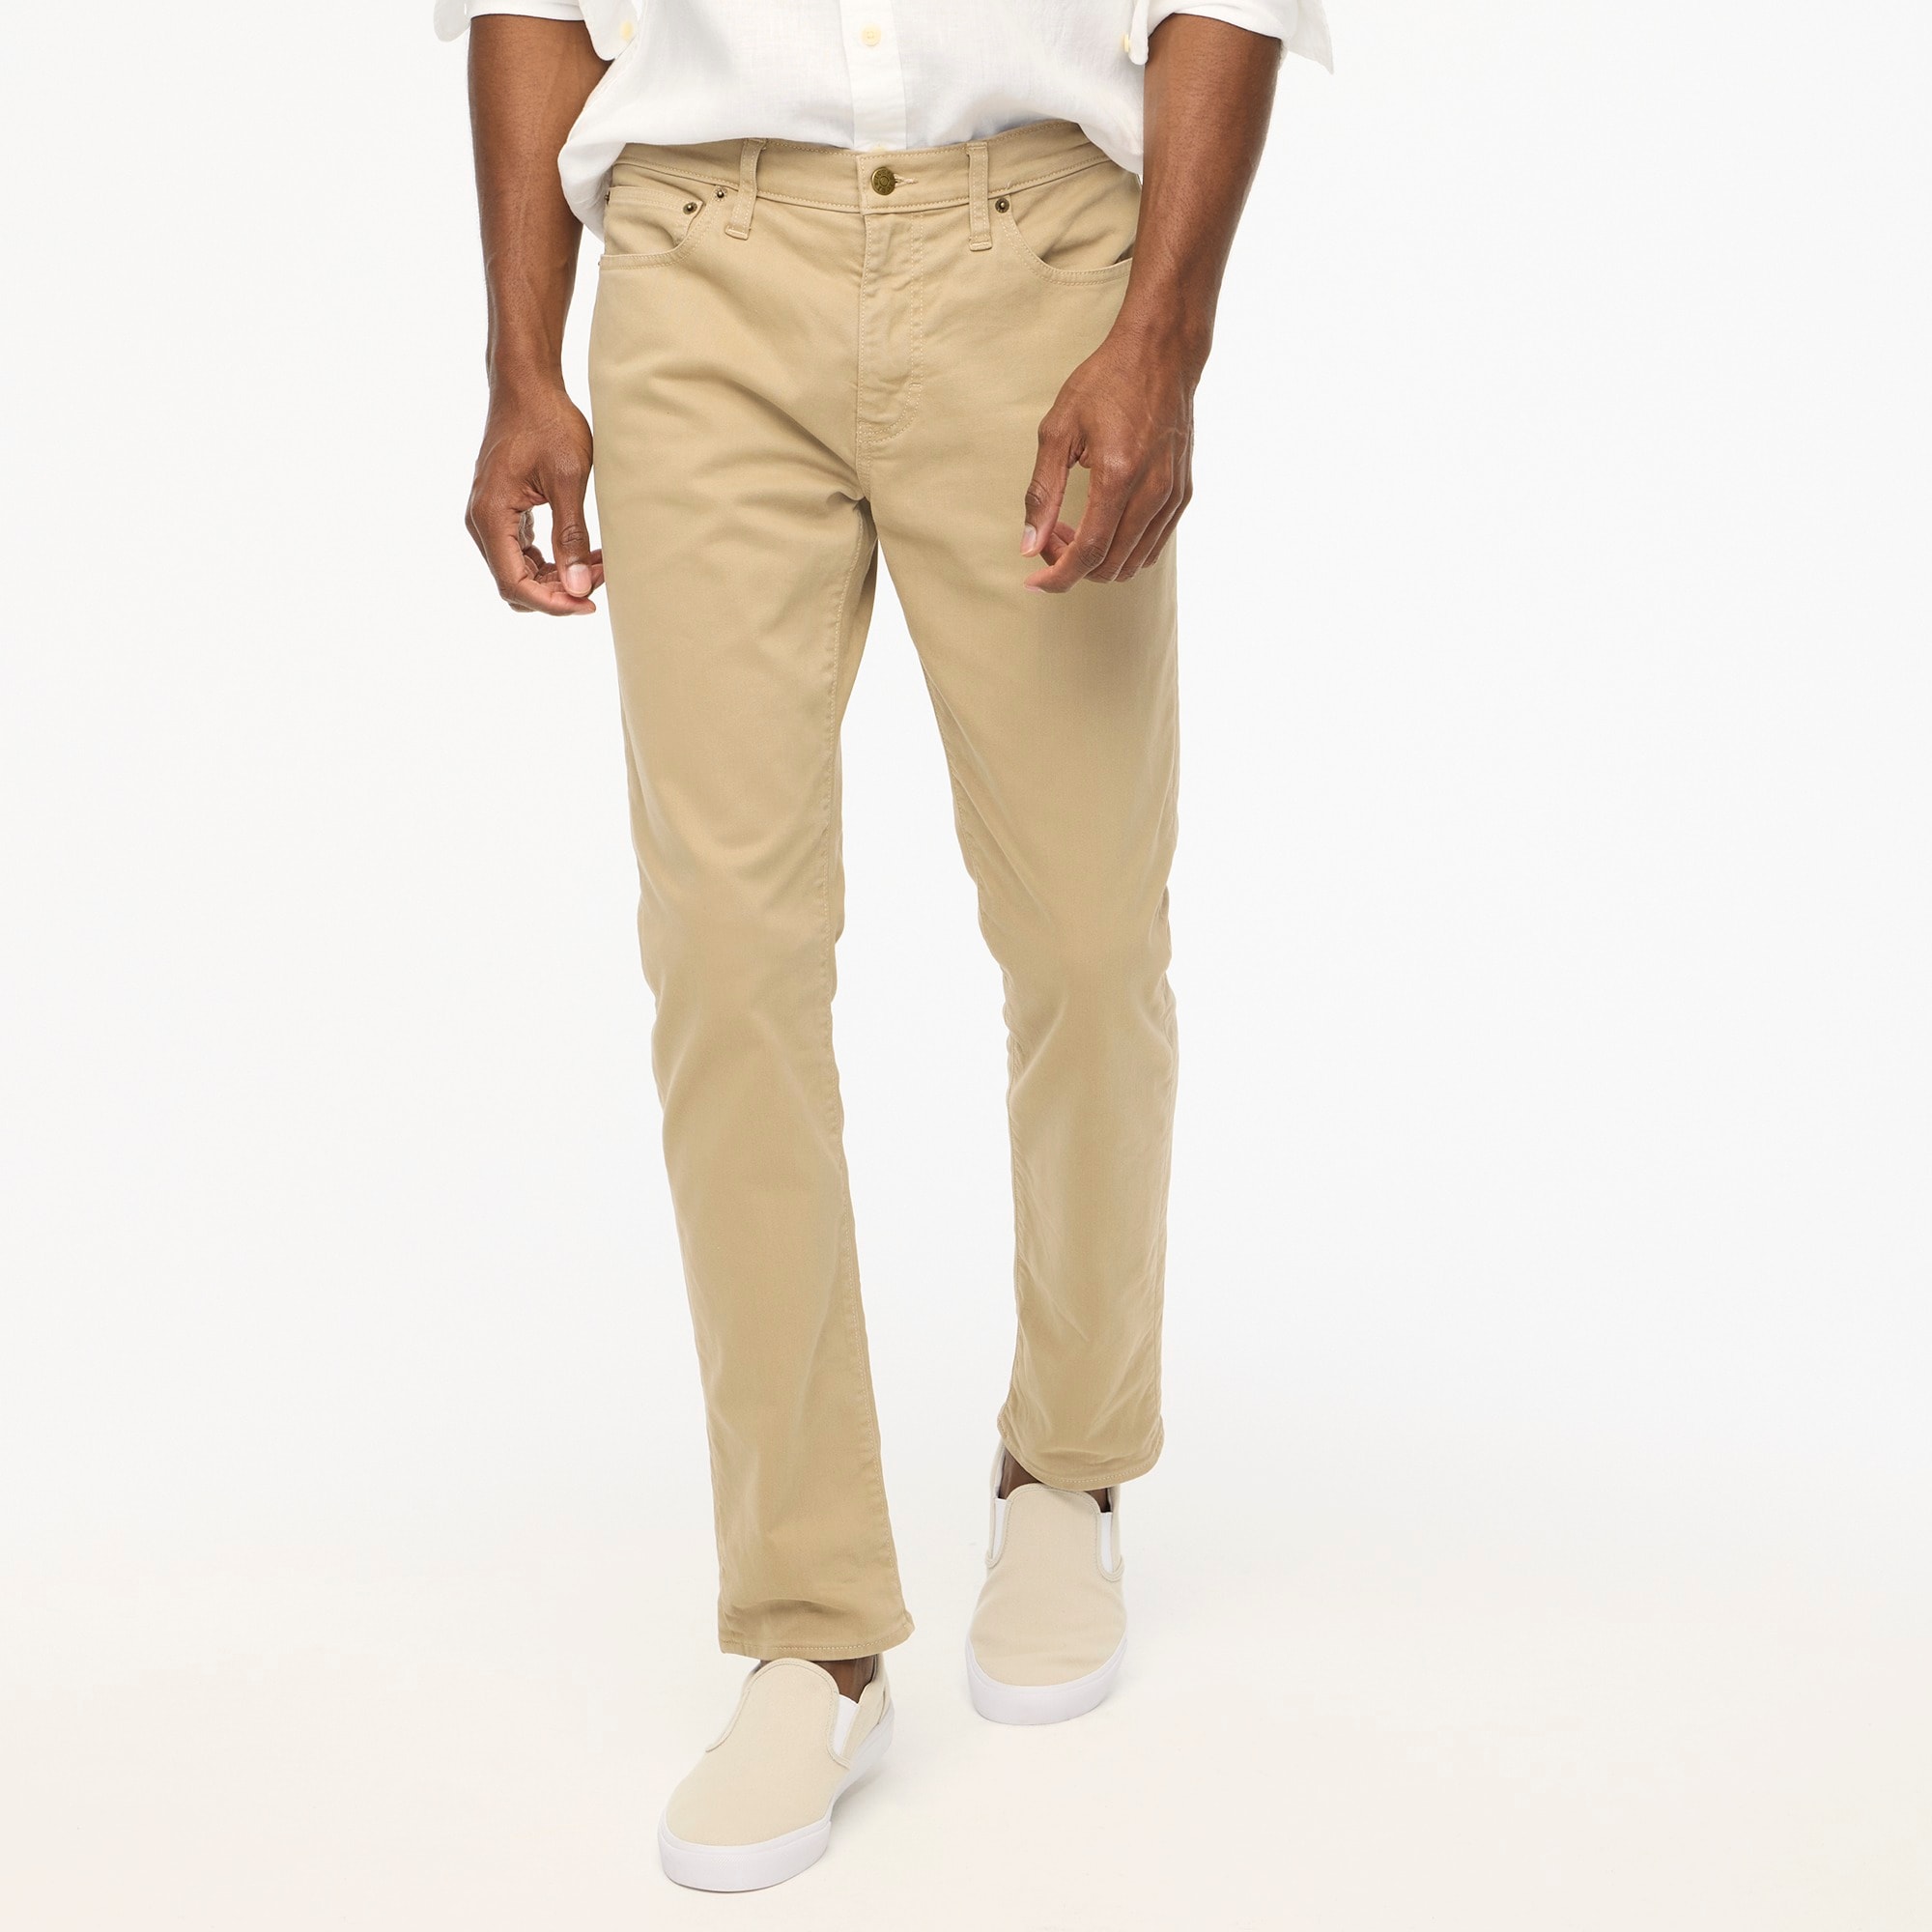 Jcrew Straight-fit garment-dyed five-pocket pant